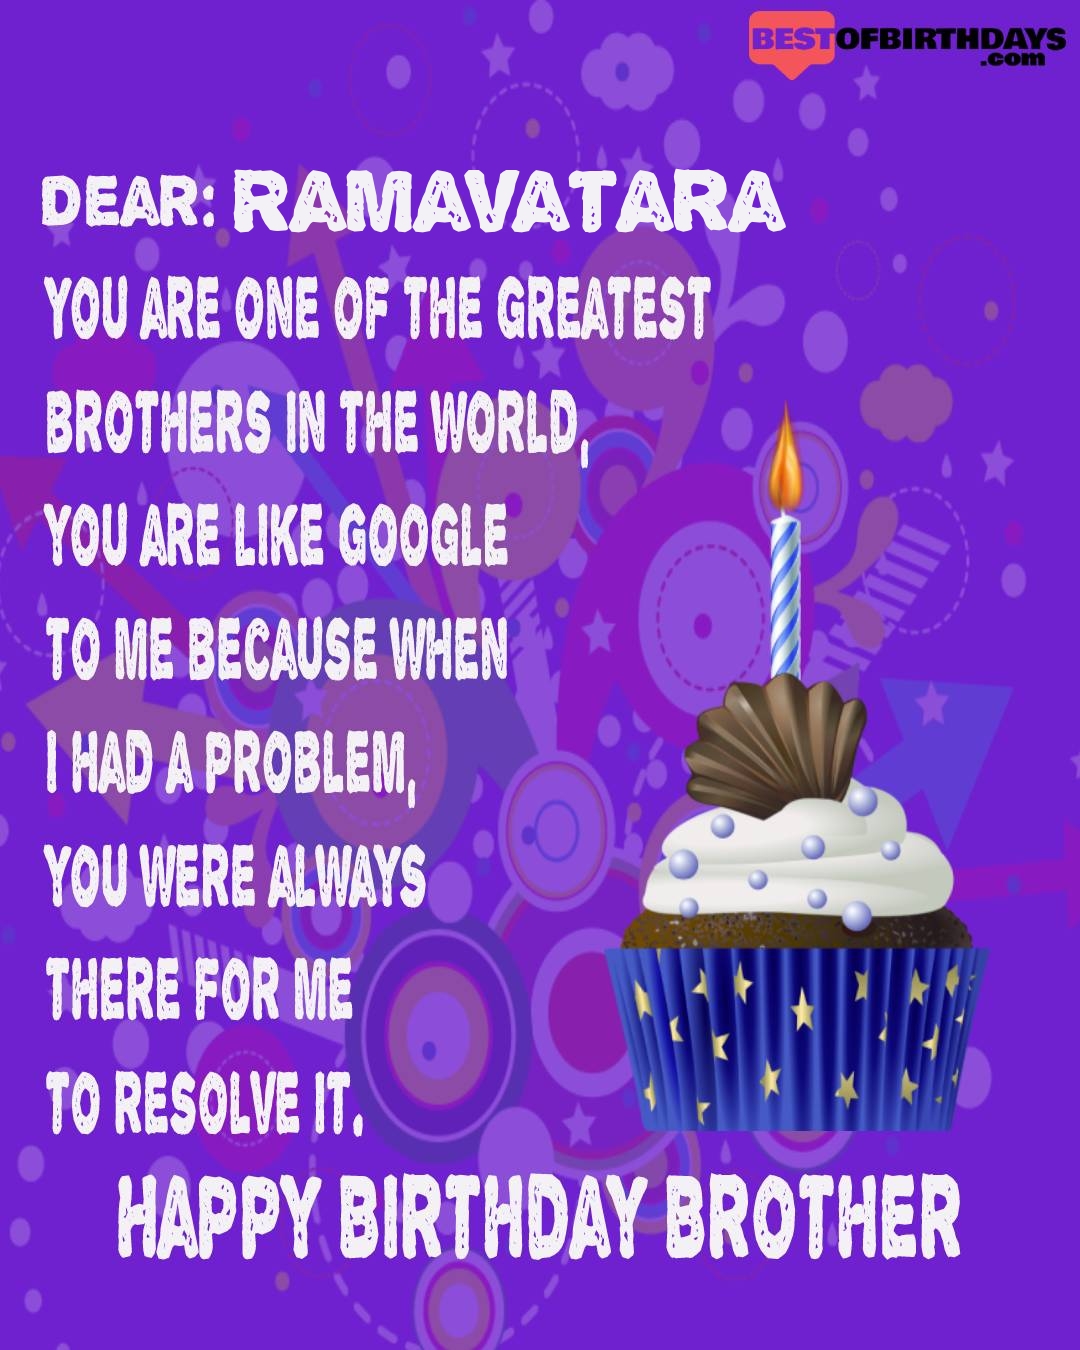 Happy birthday ramavatara bhai brother bro